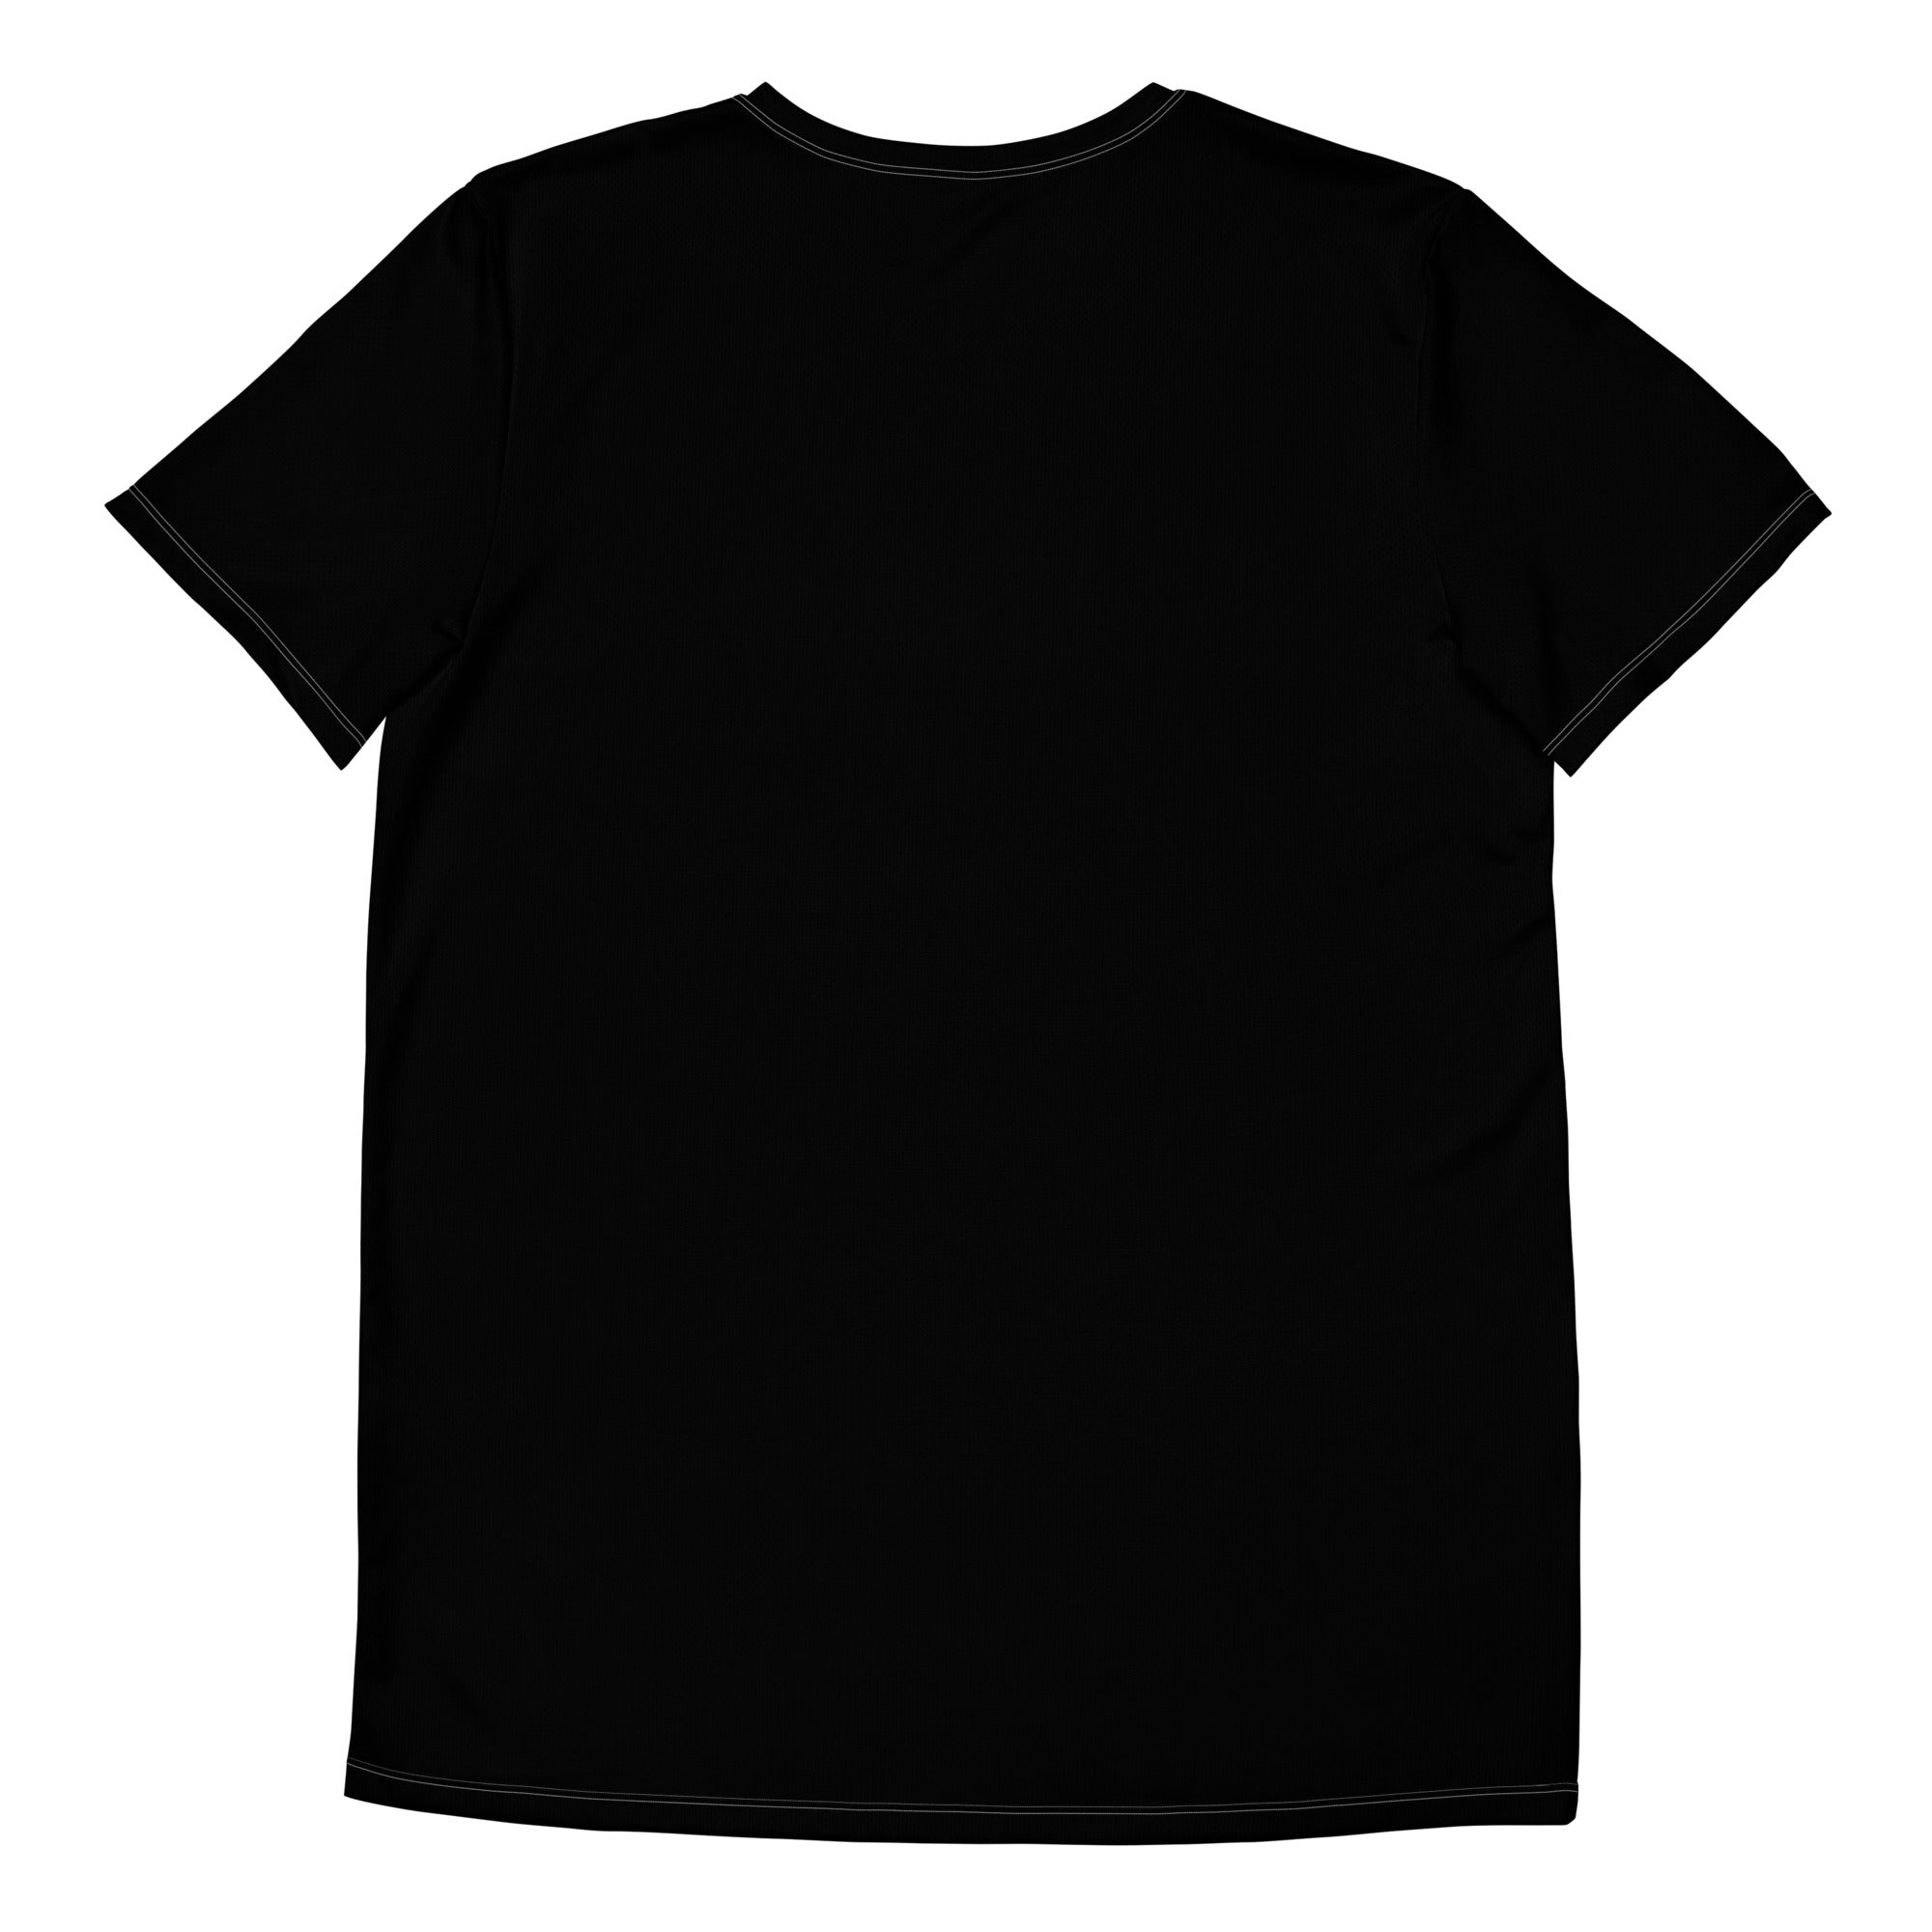 Traphagen All-Over Print Men's Athletic T-shirt V2